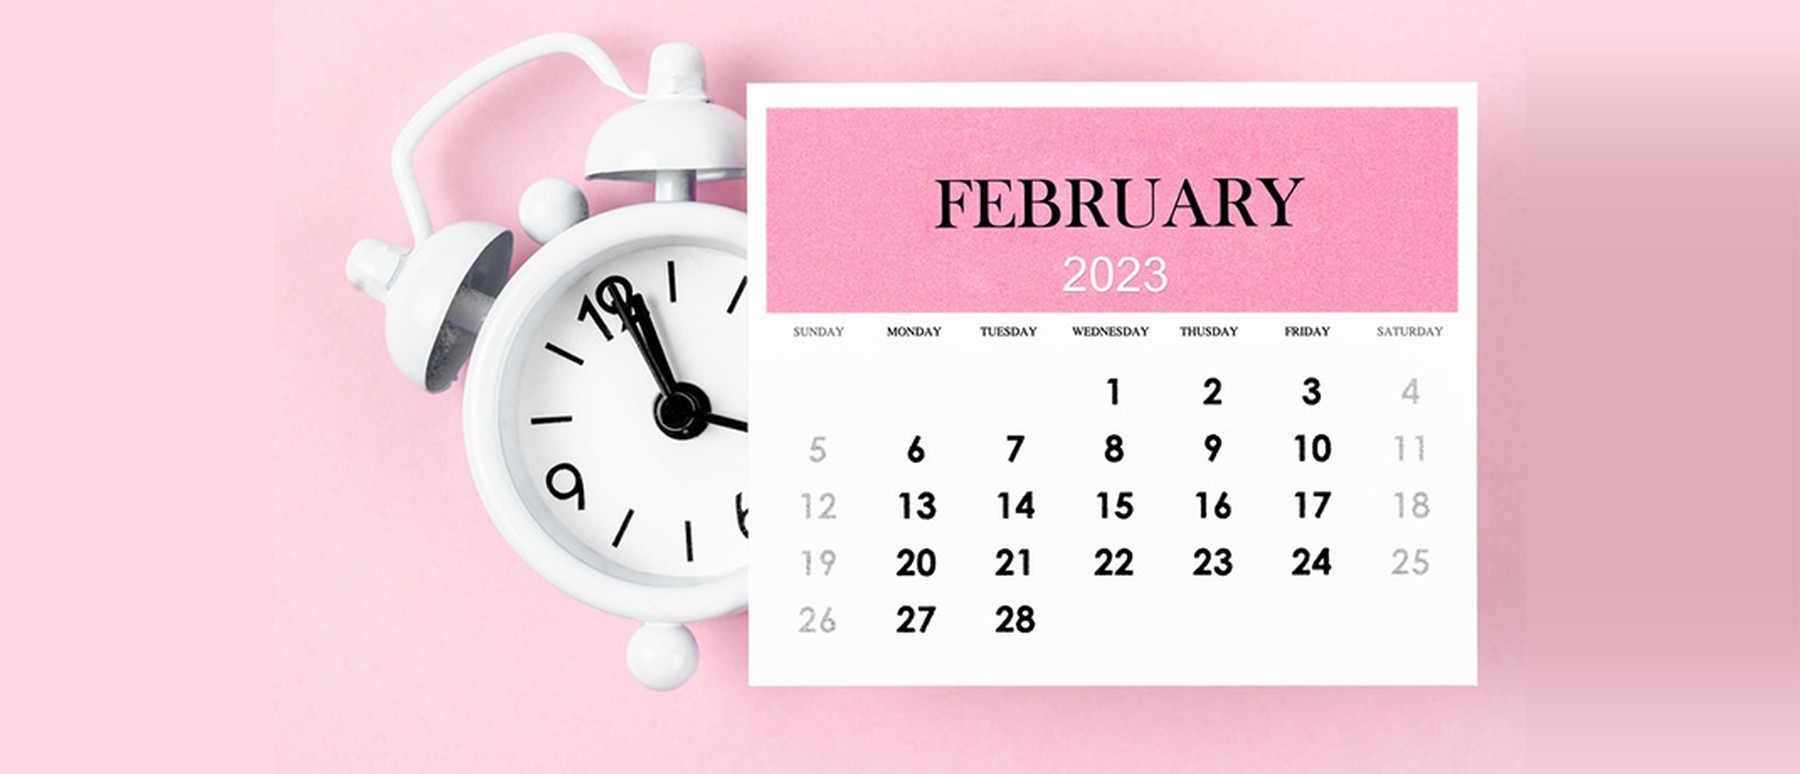 Pink February calendar